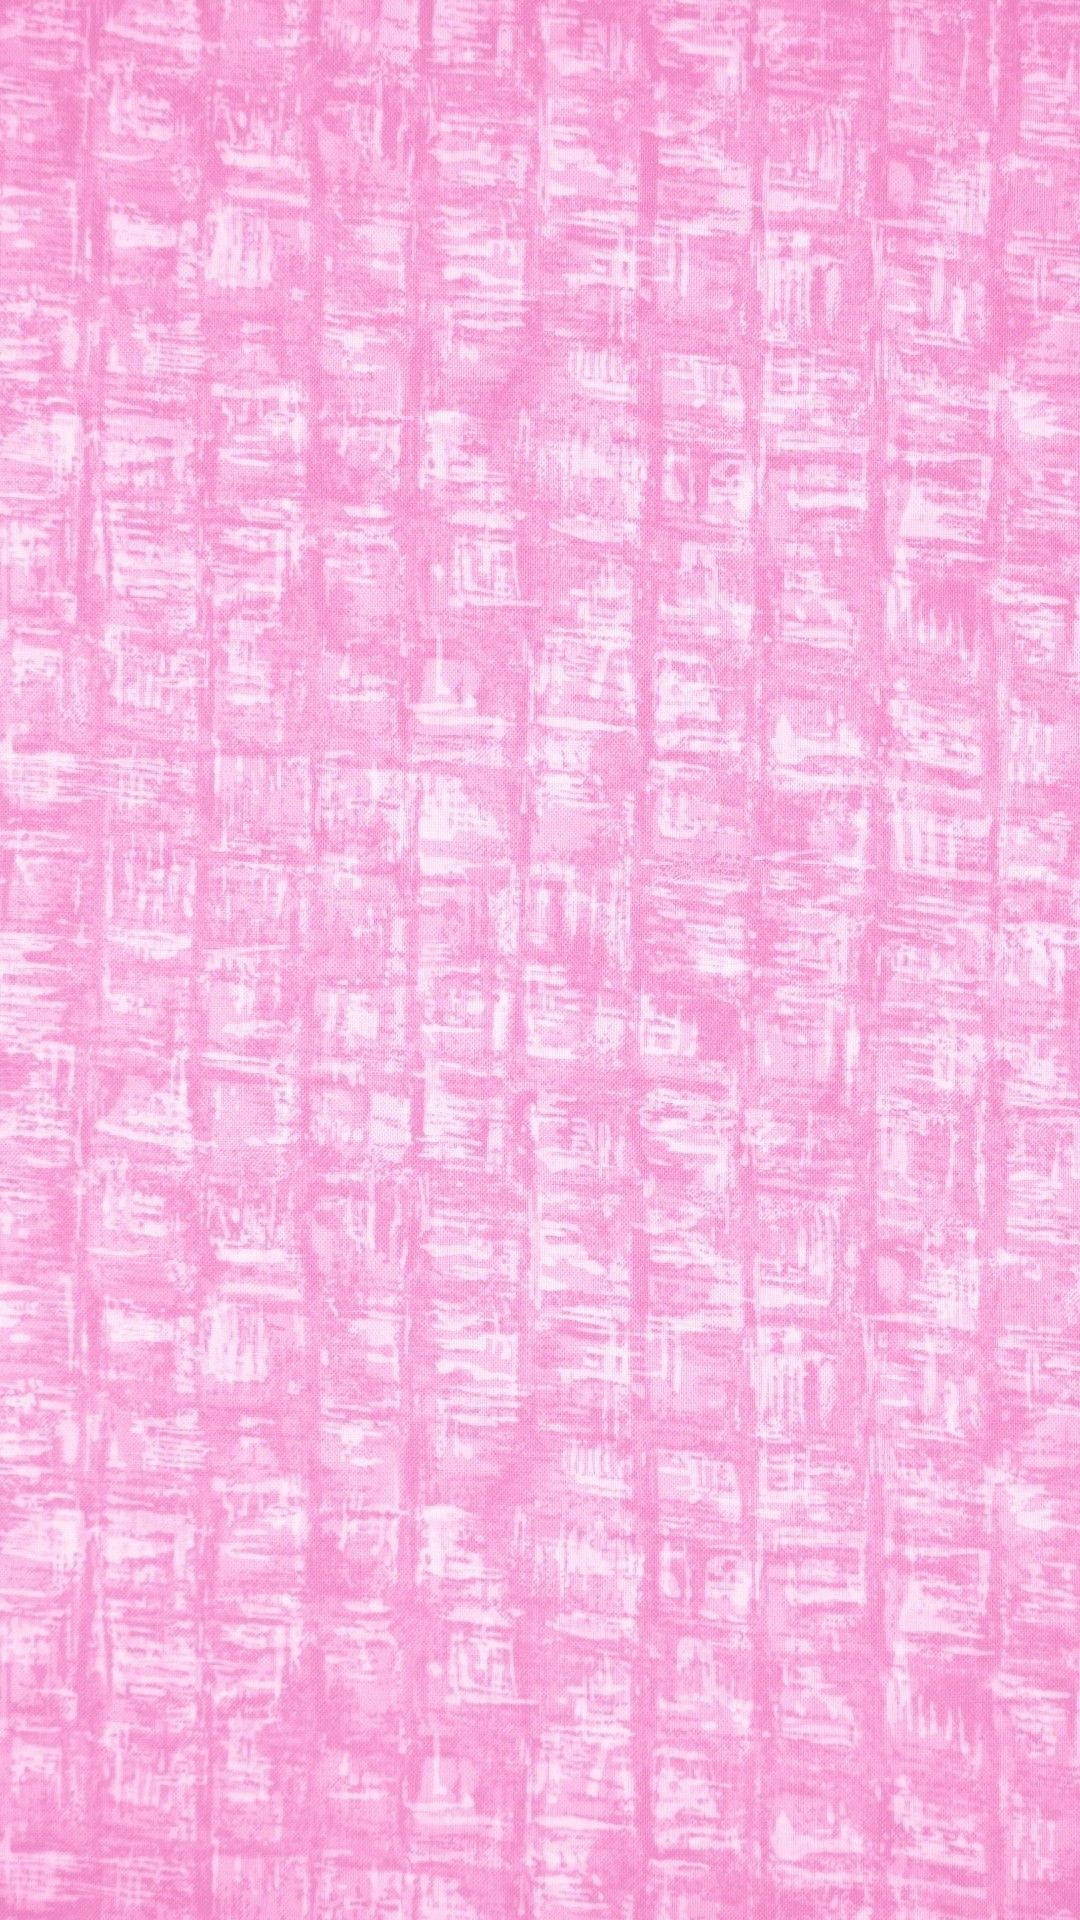 Pink Texture Mobile Wallpaper. Best HD Wallpaper. Wallpaper, Pink and purple wallpaper, iPhone wallpaper